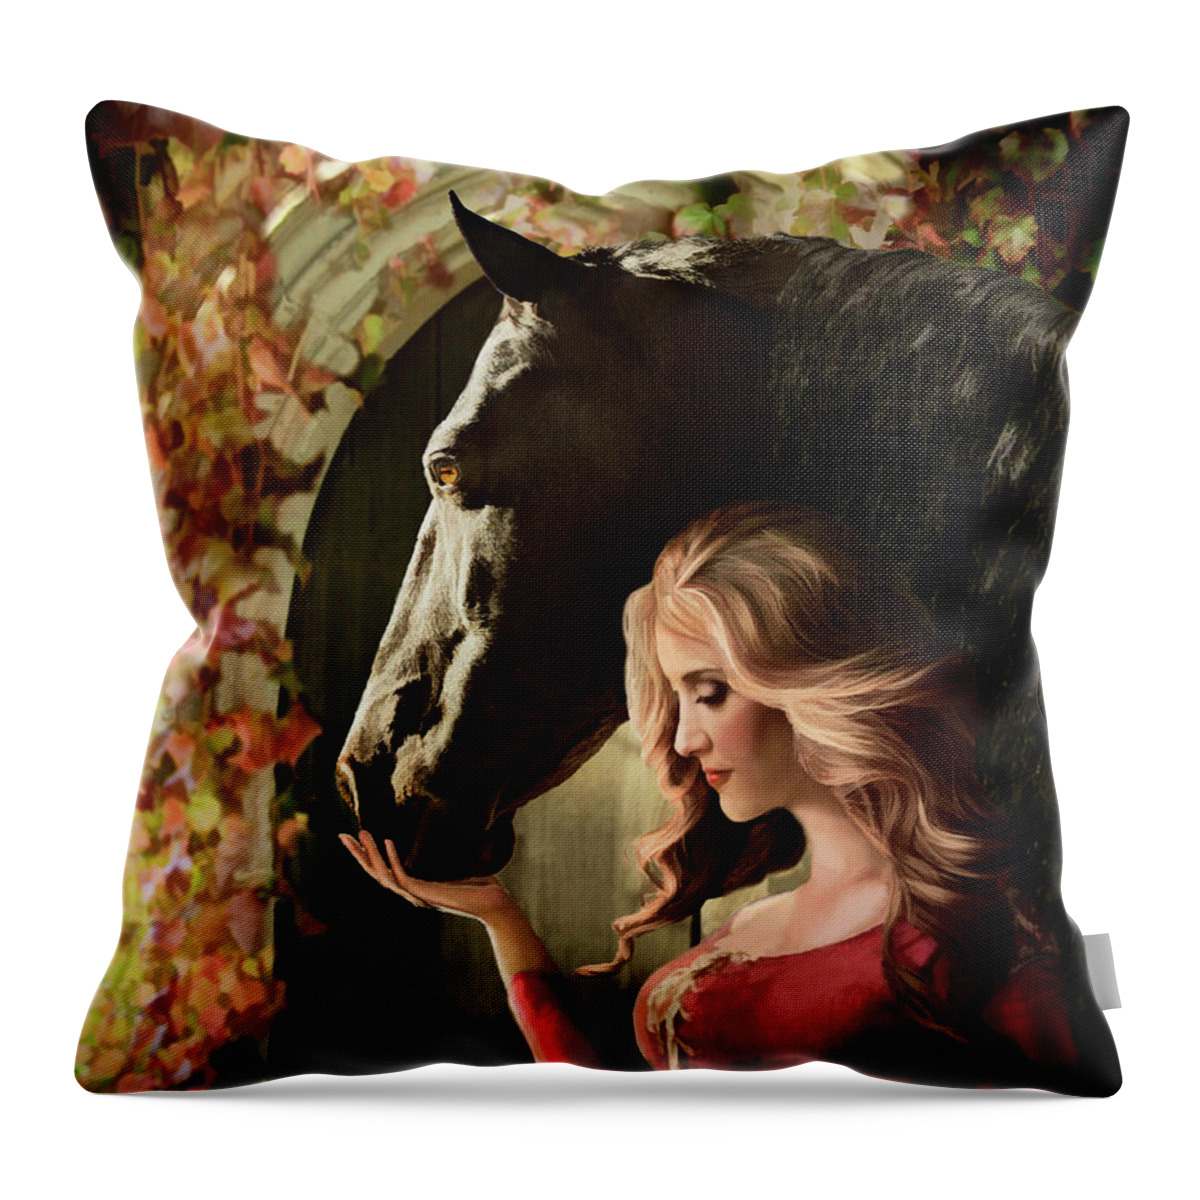 Black Horses Throw Pillow featuring the digital art A Secret Passage by Melinda Hughes-Berland